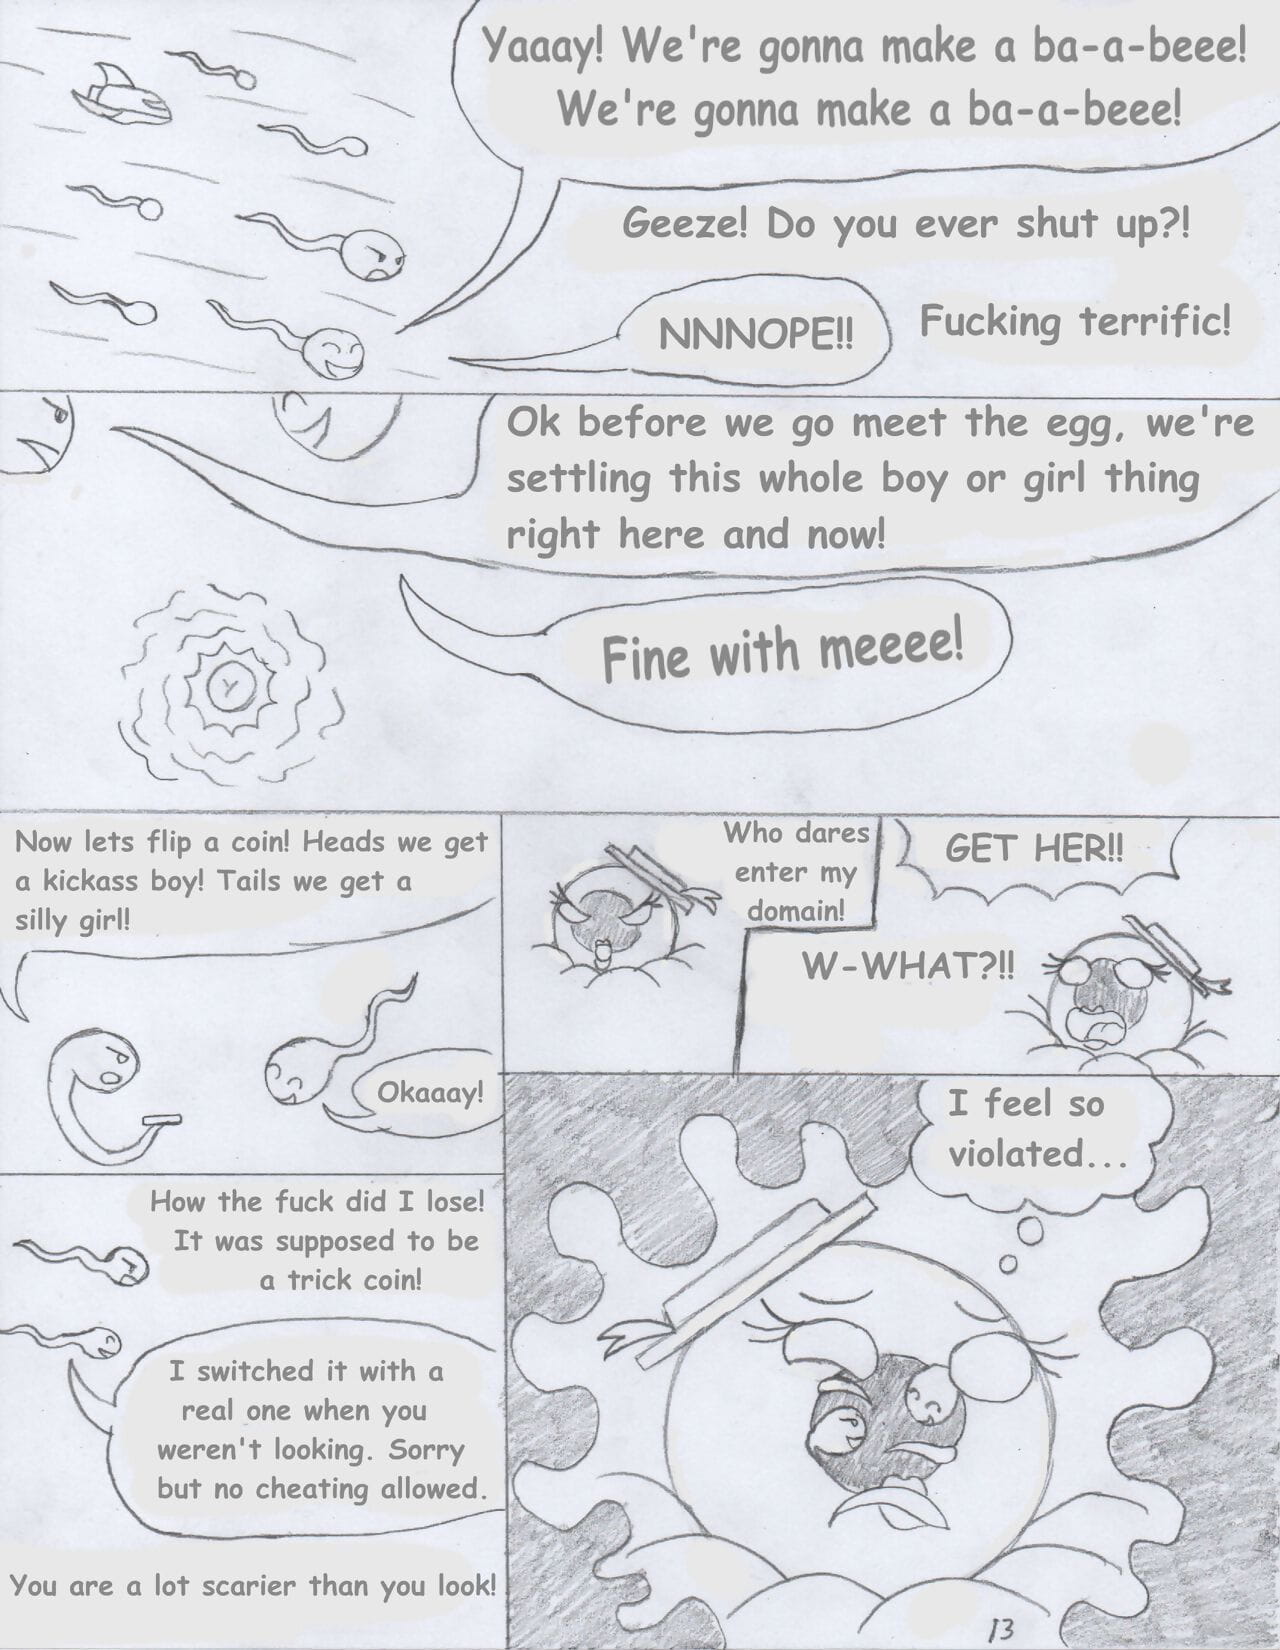 foxtide888 スケッチ コミック ギャラリー 2 部分 3 page 1